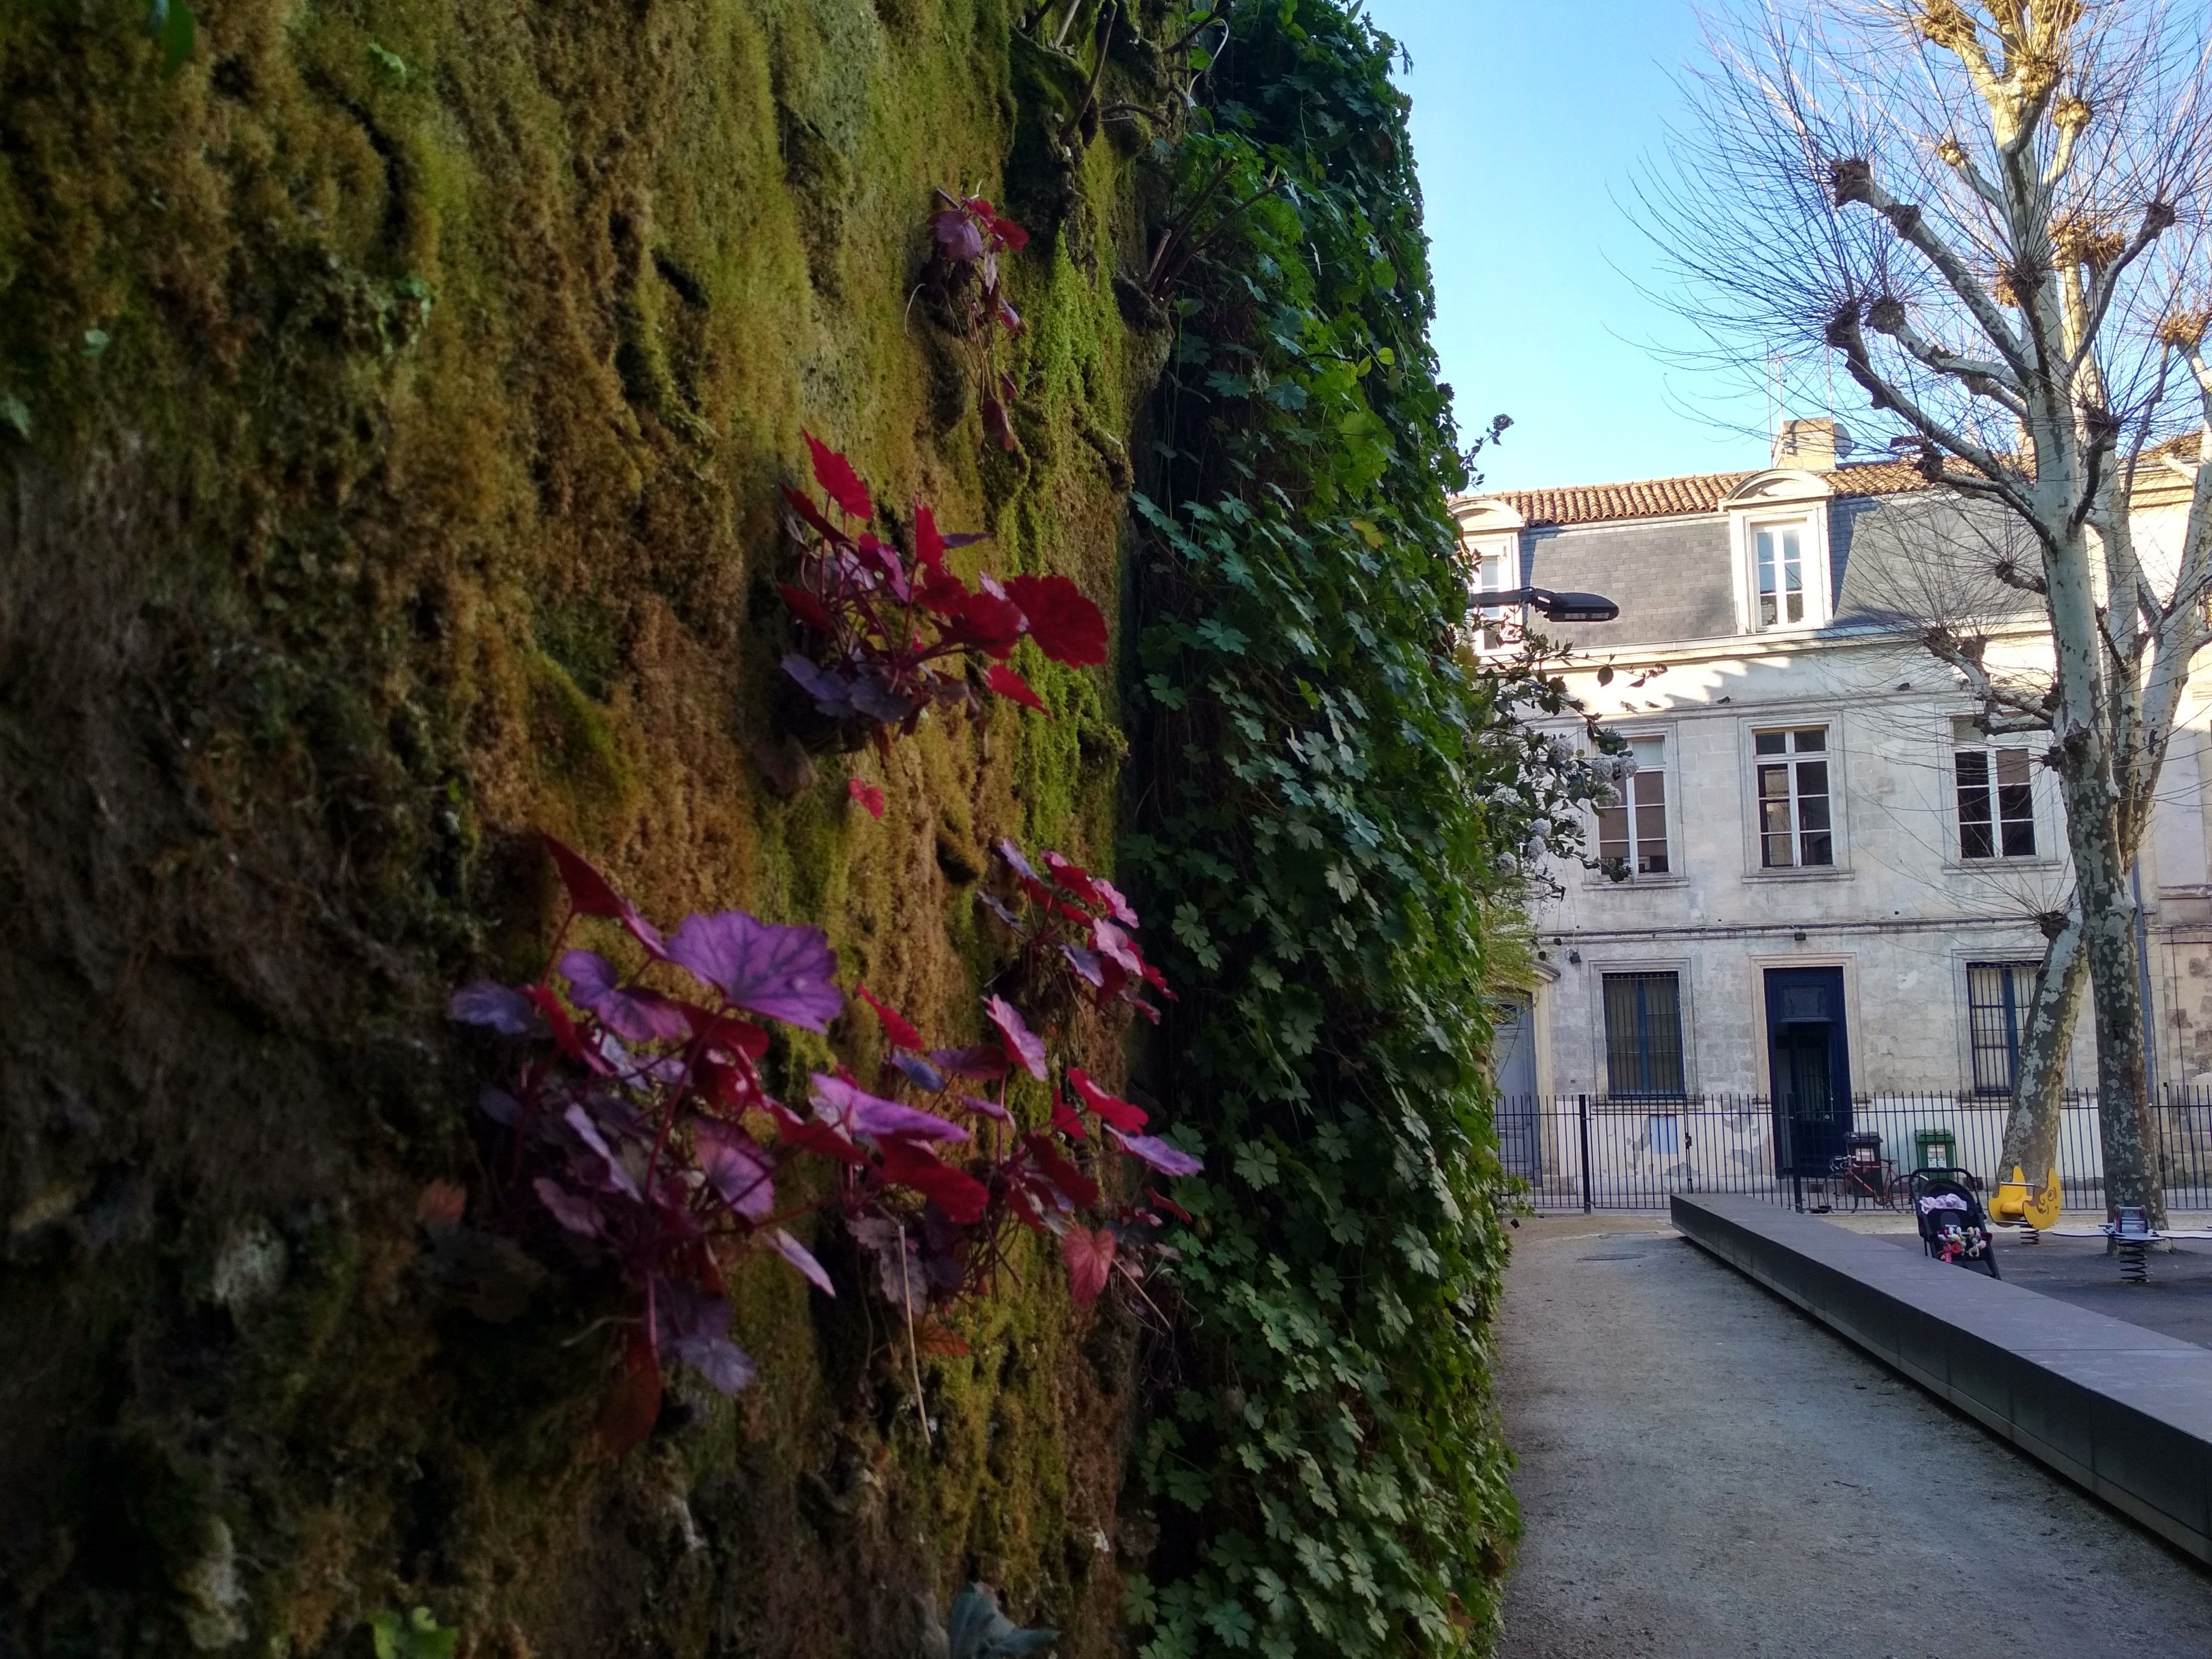 Square Vinet, Bordeaux: All year